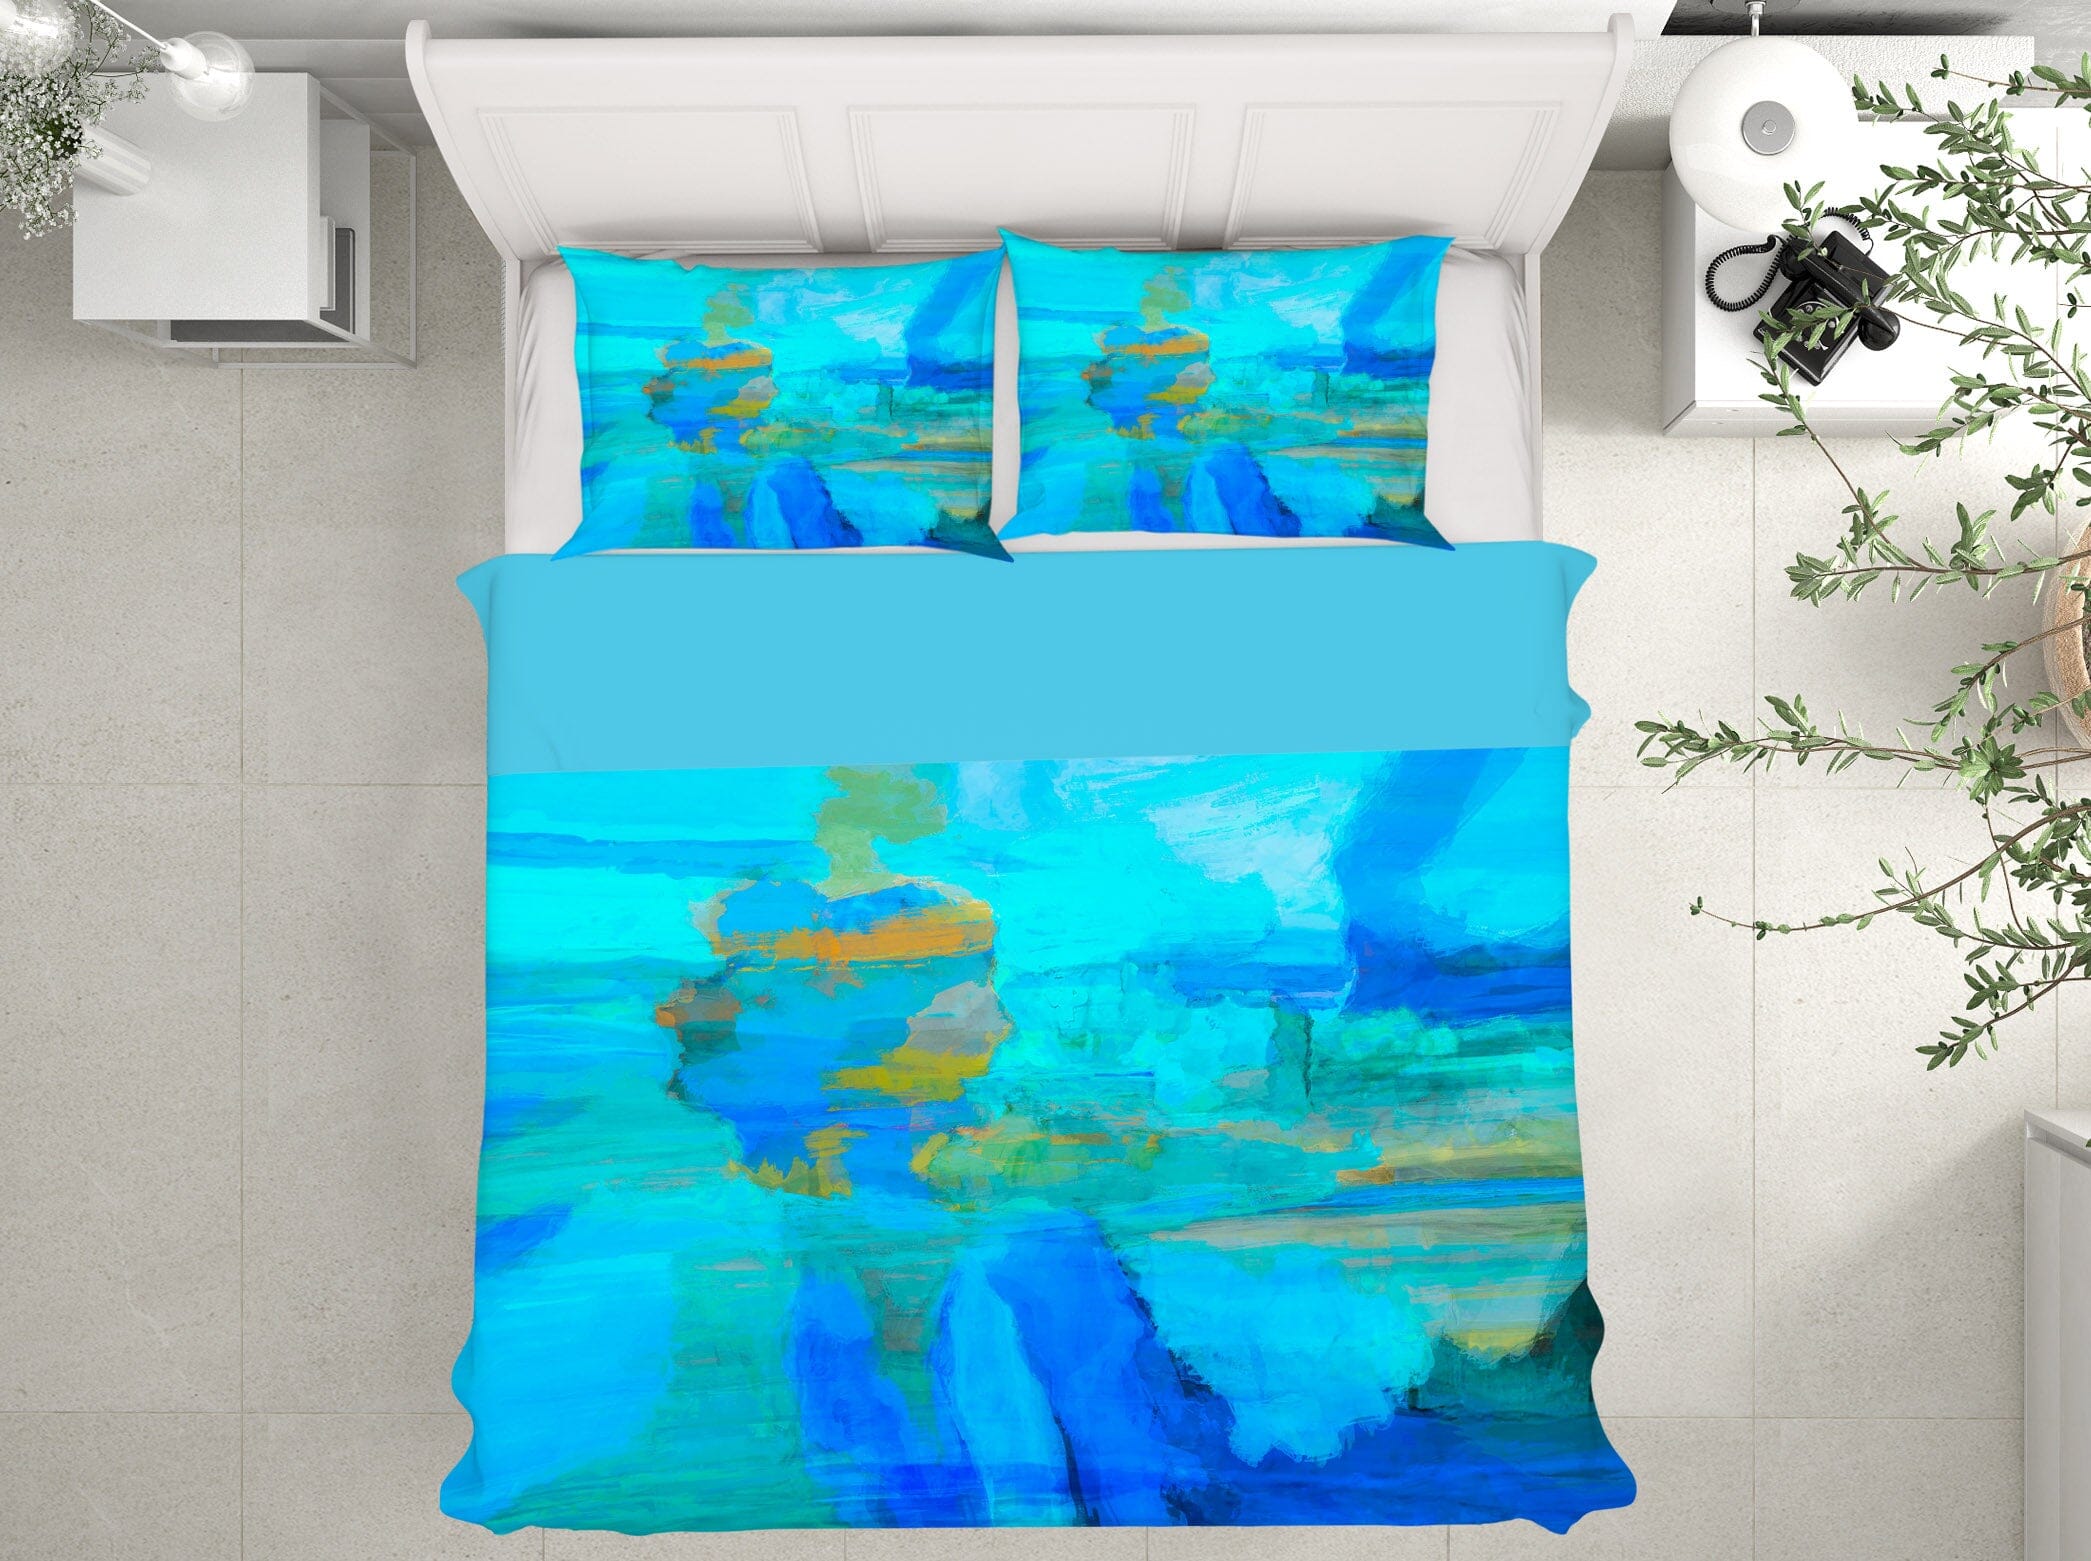 3D Underwater World 2112 Michael Tienhaara Bedding Bed Pillowcases Quilt Quiet Covers AJ Creativity Home 